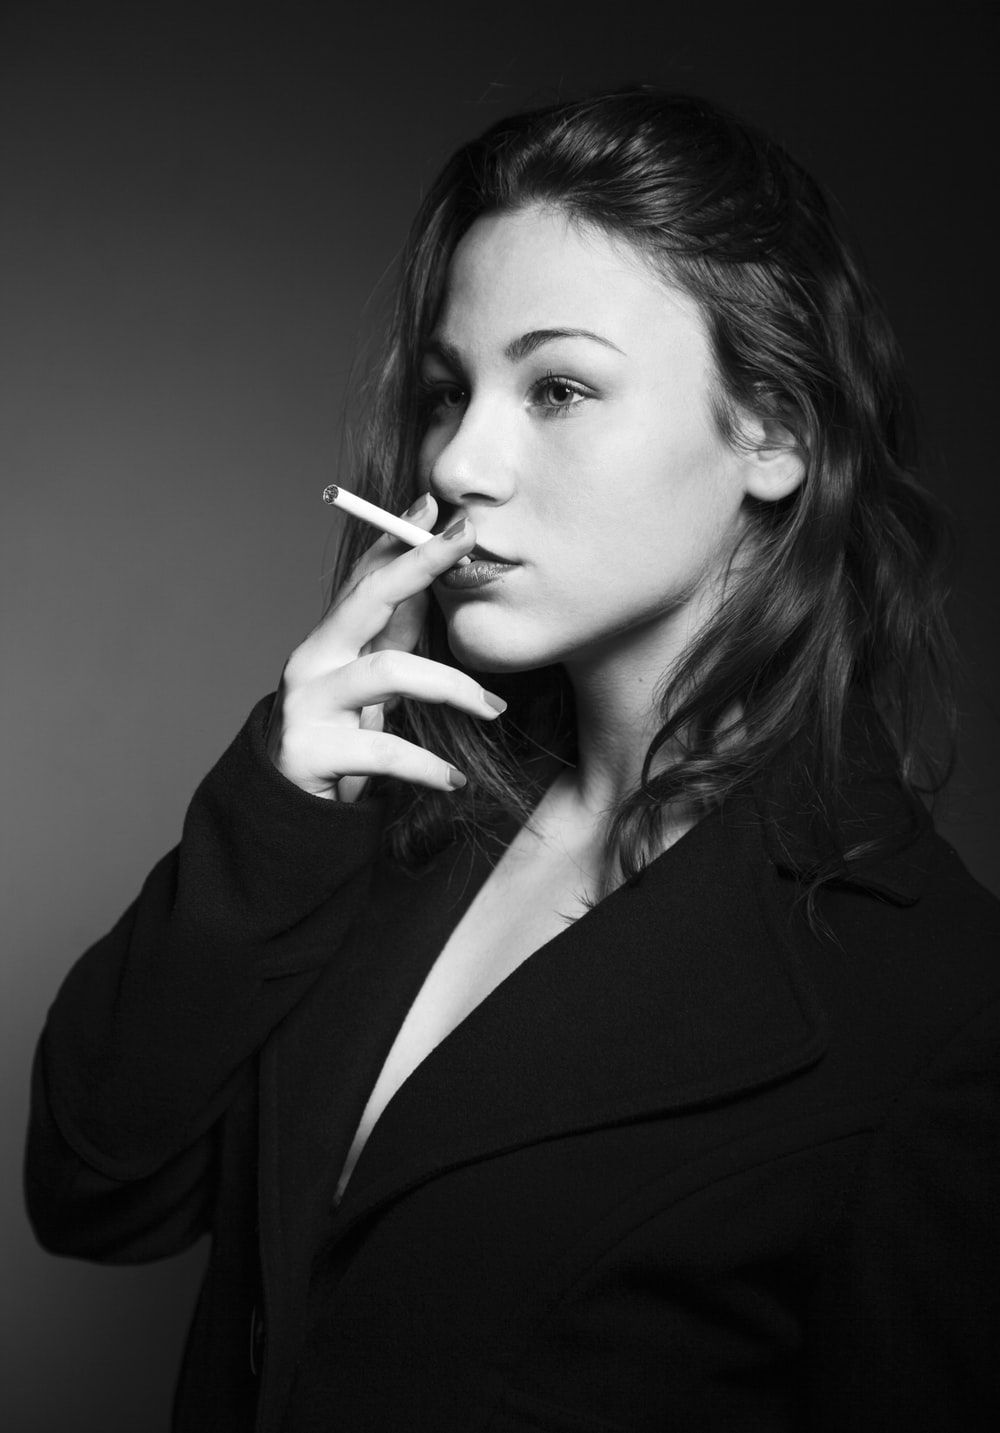 Girl Smoking Picture [HQ]. Download Free Image